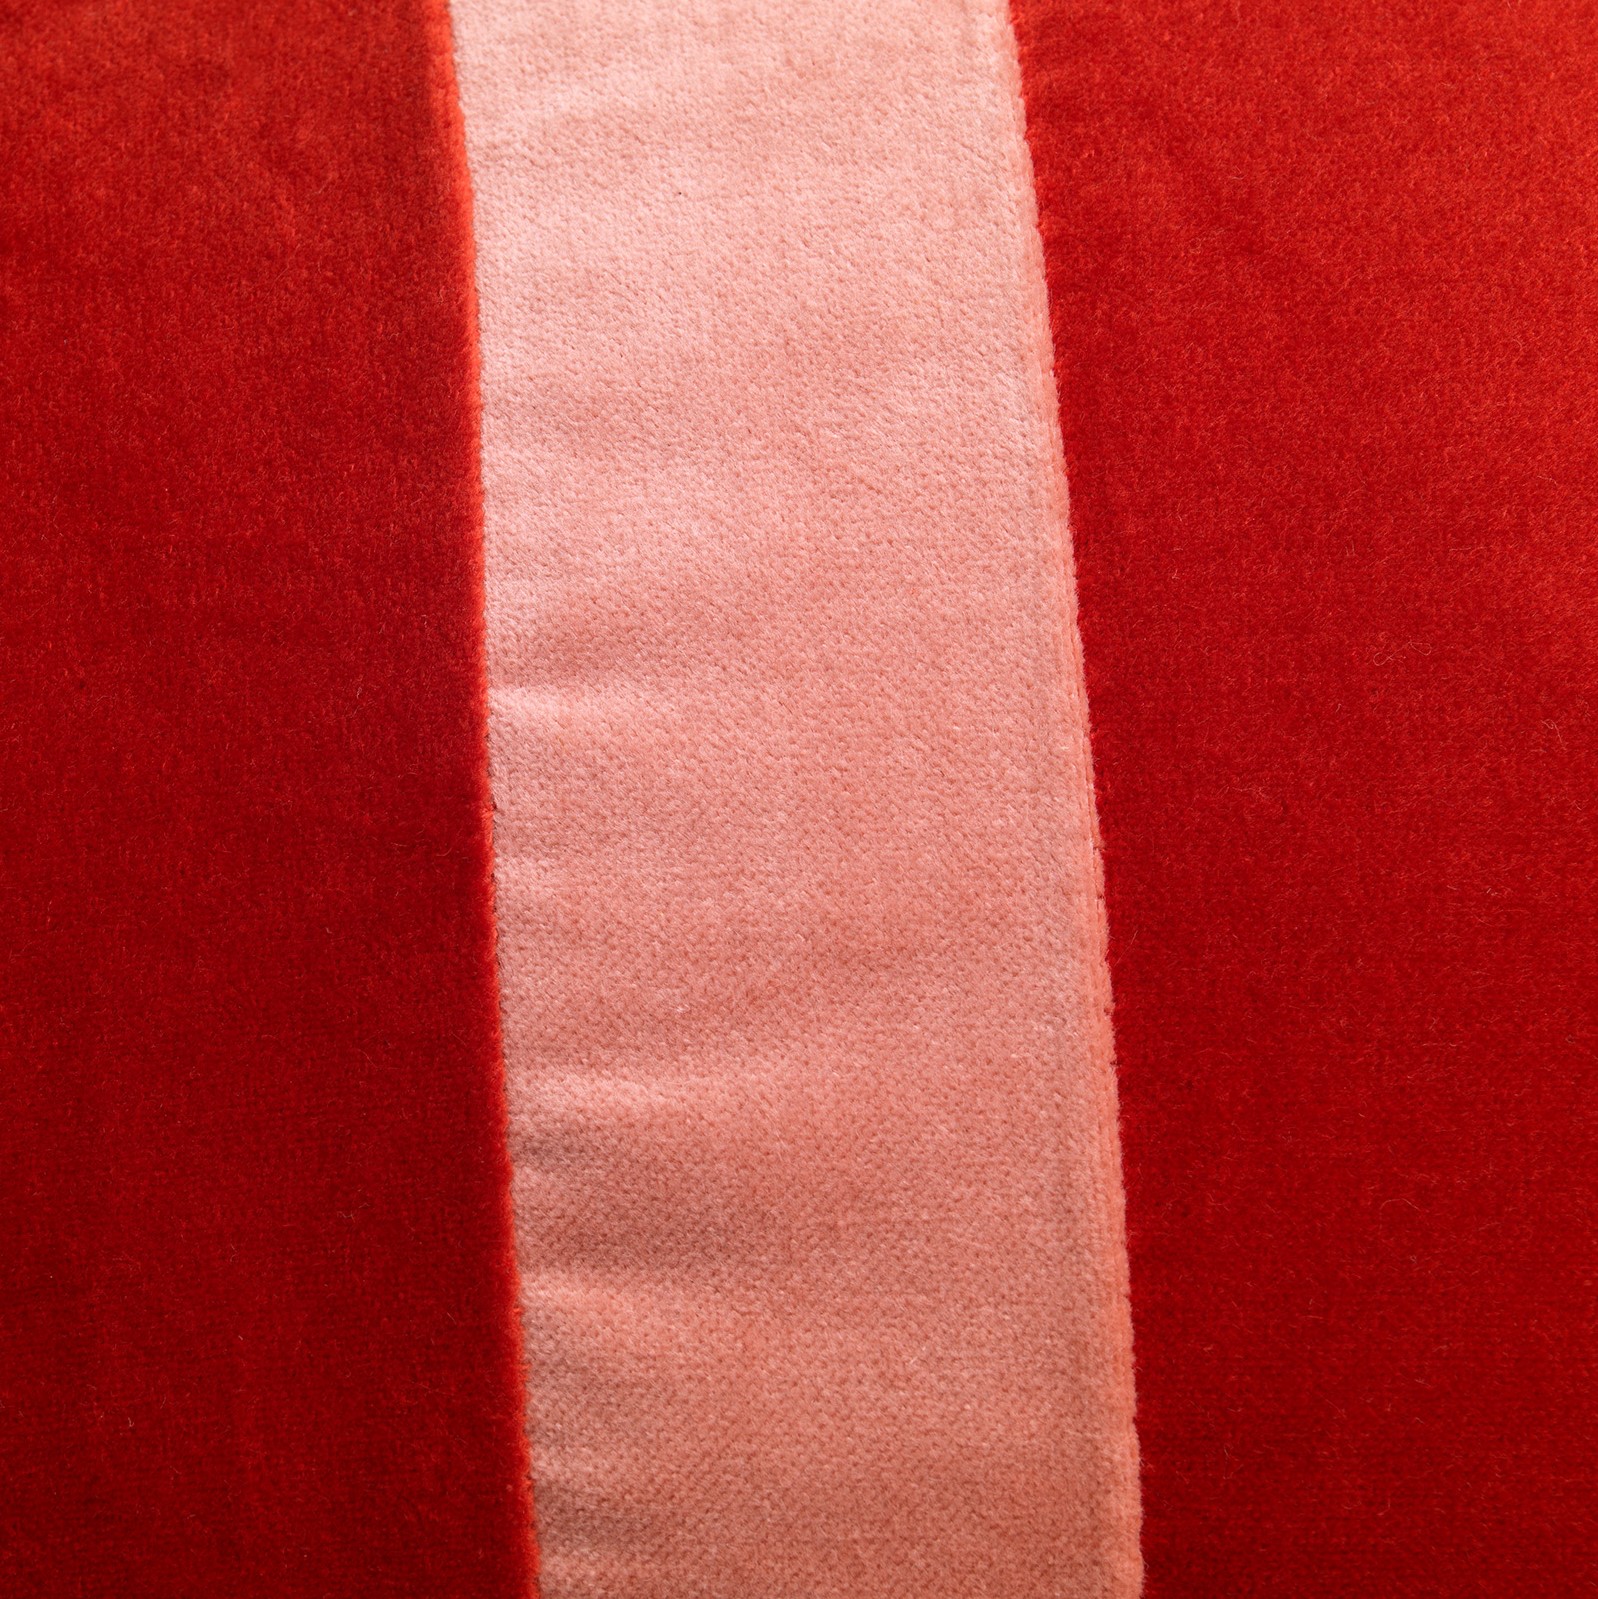 PIPPA - Kussenhoes velvet 30x50 cm -  Aurora Red - rood